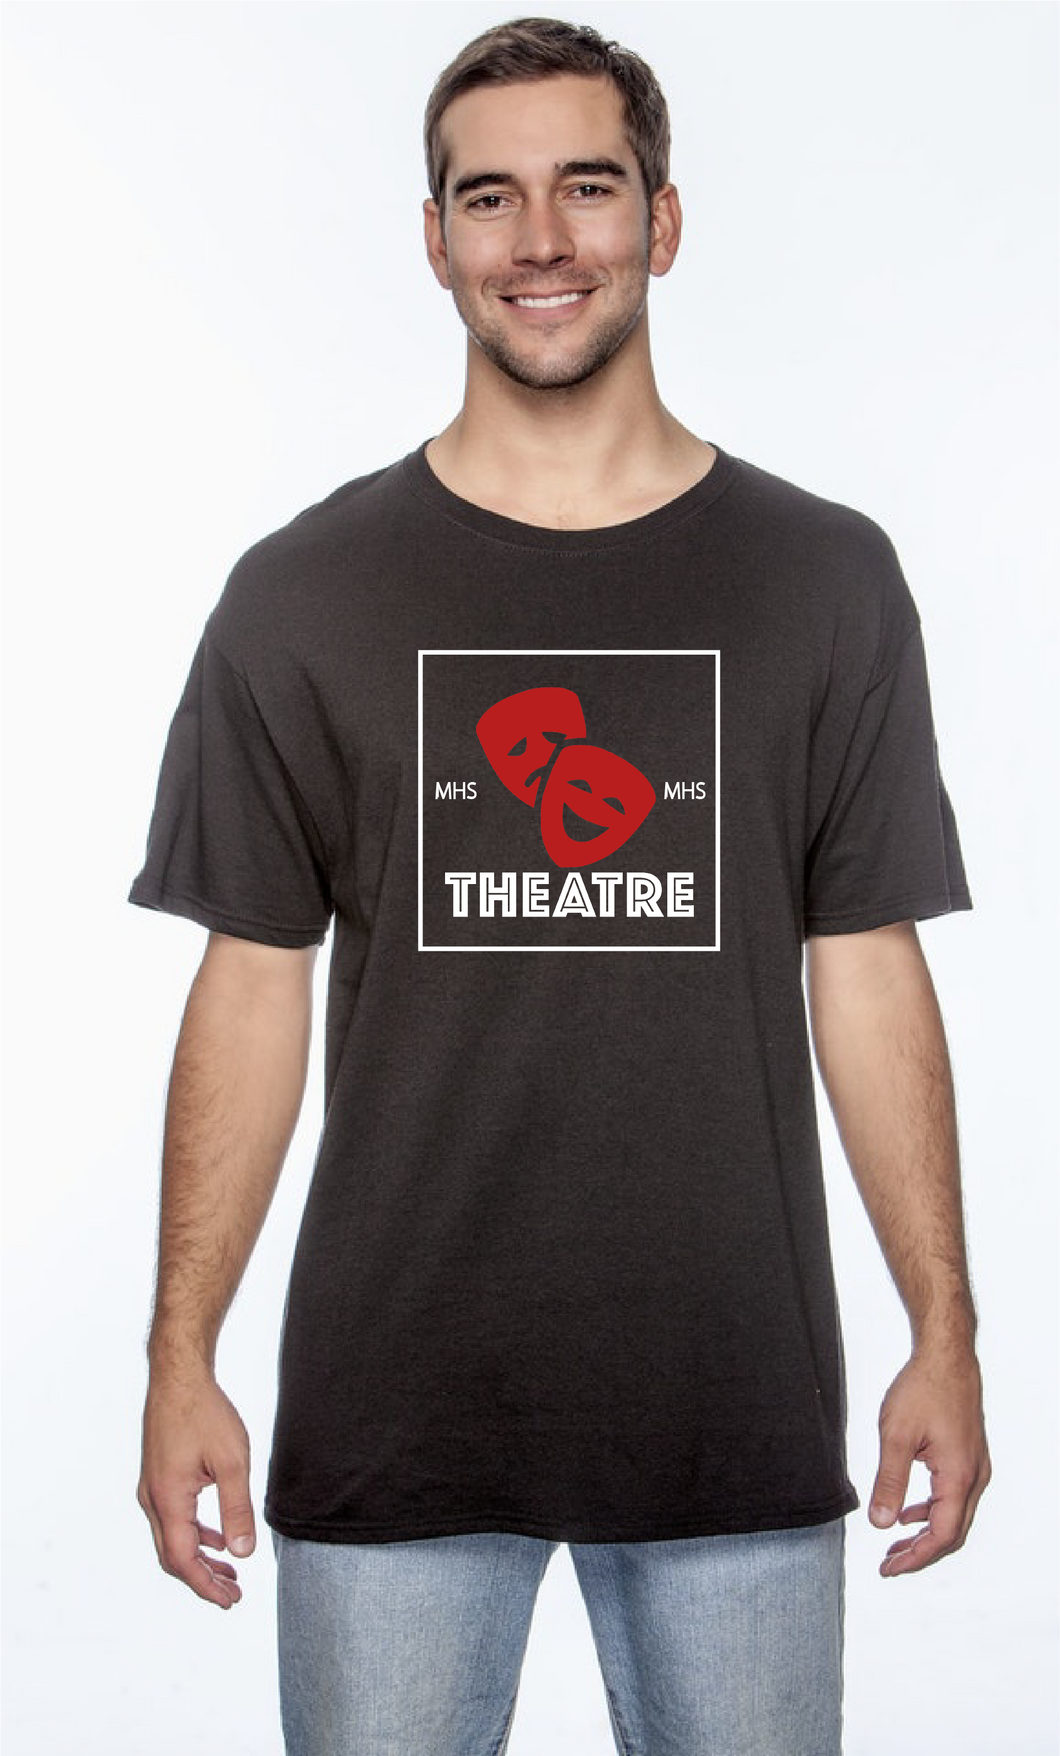 MHS Theatre Shirt